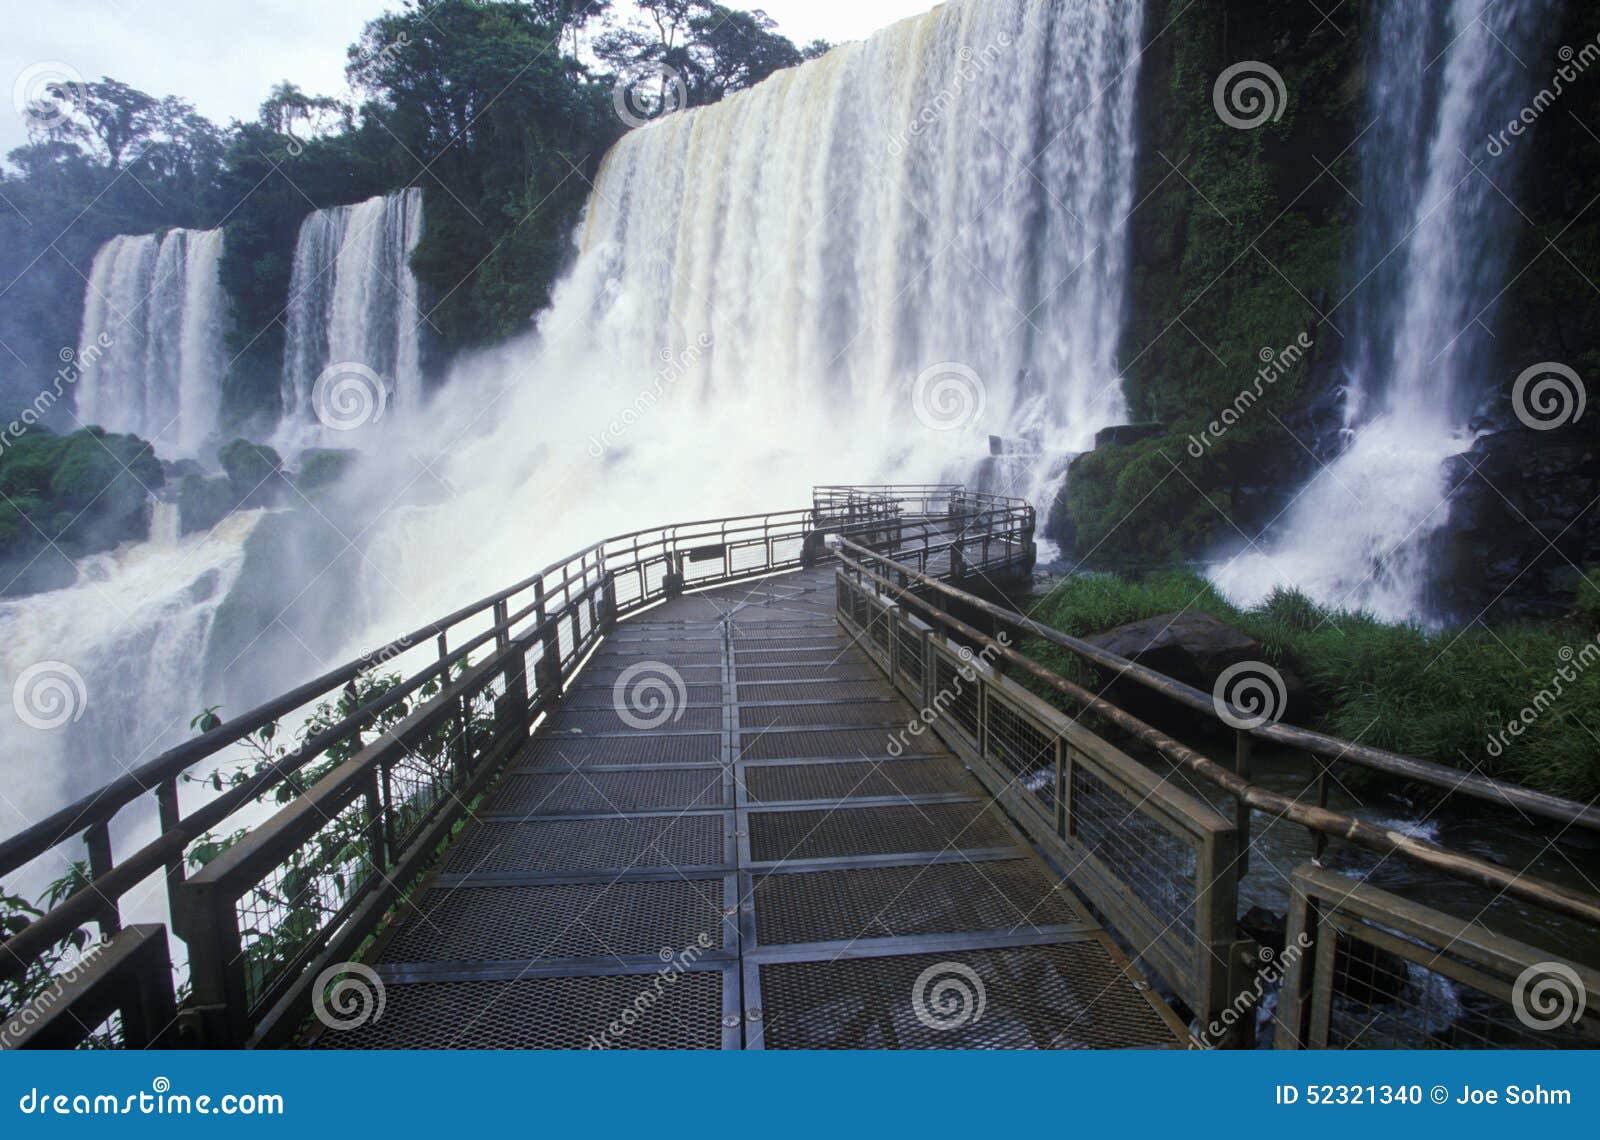 iguazu waterfalls in parque nacional iguazu, border of brazil and argentina